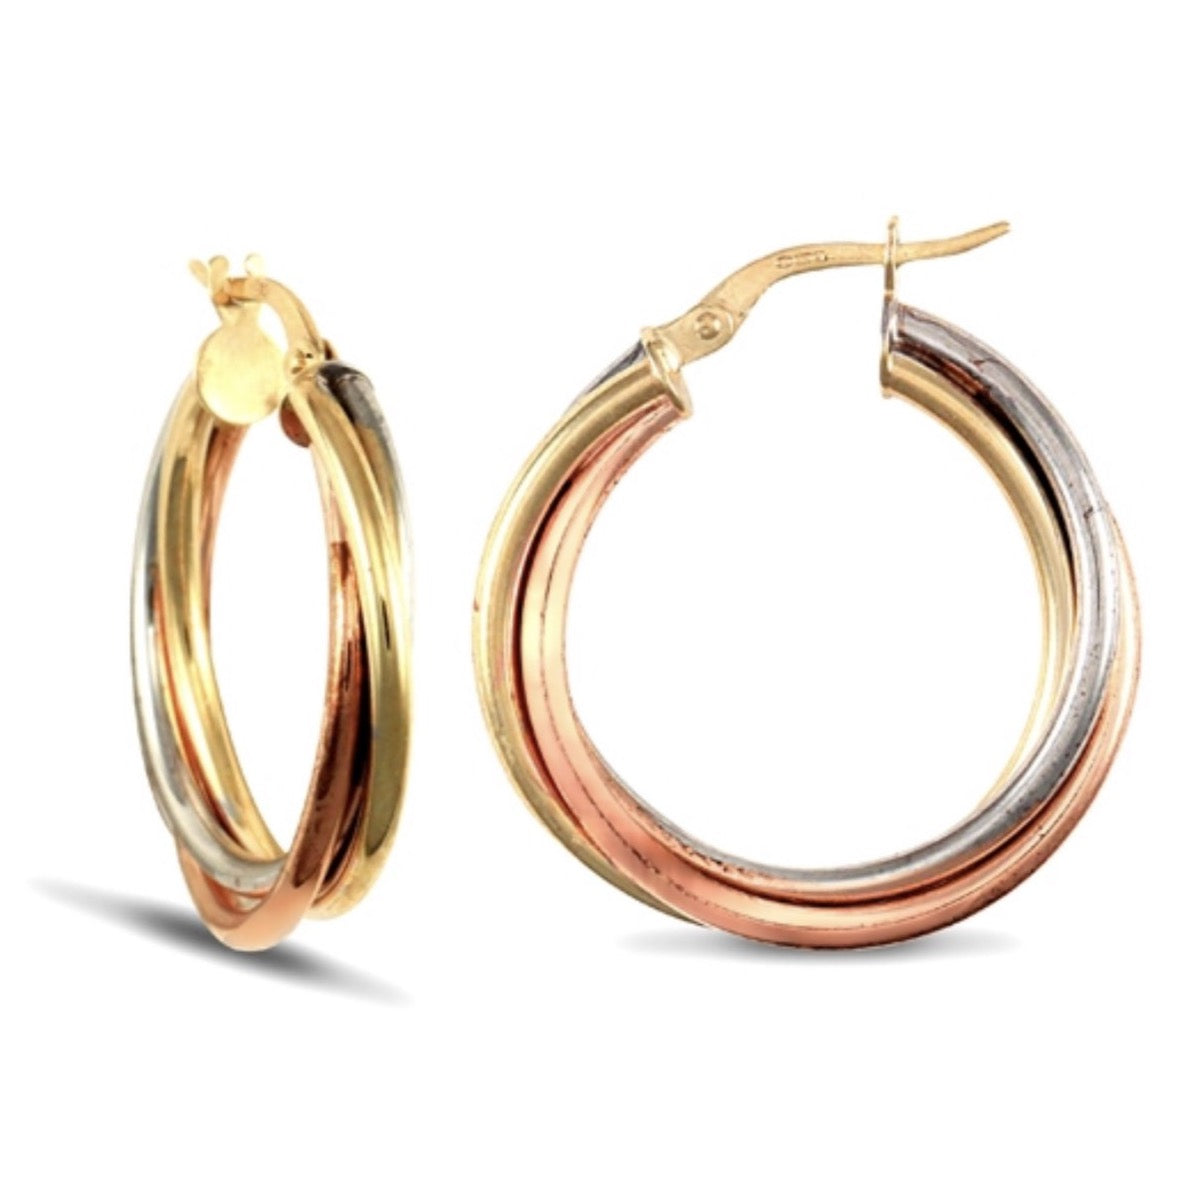 3 colour gold twist hoop earrings 2.3g